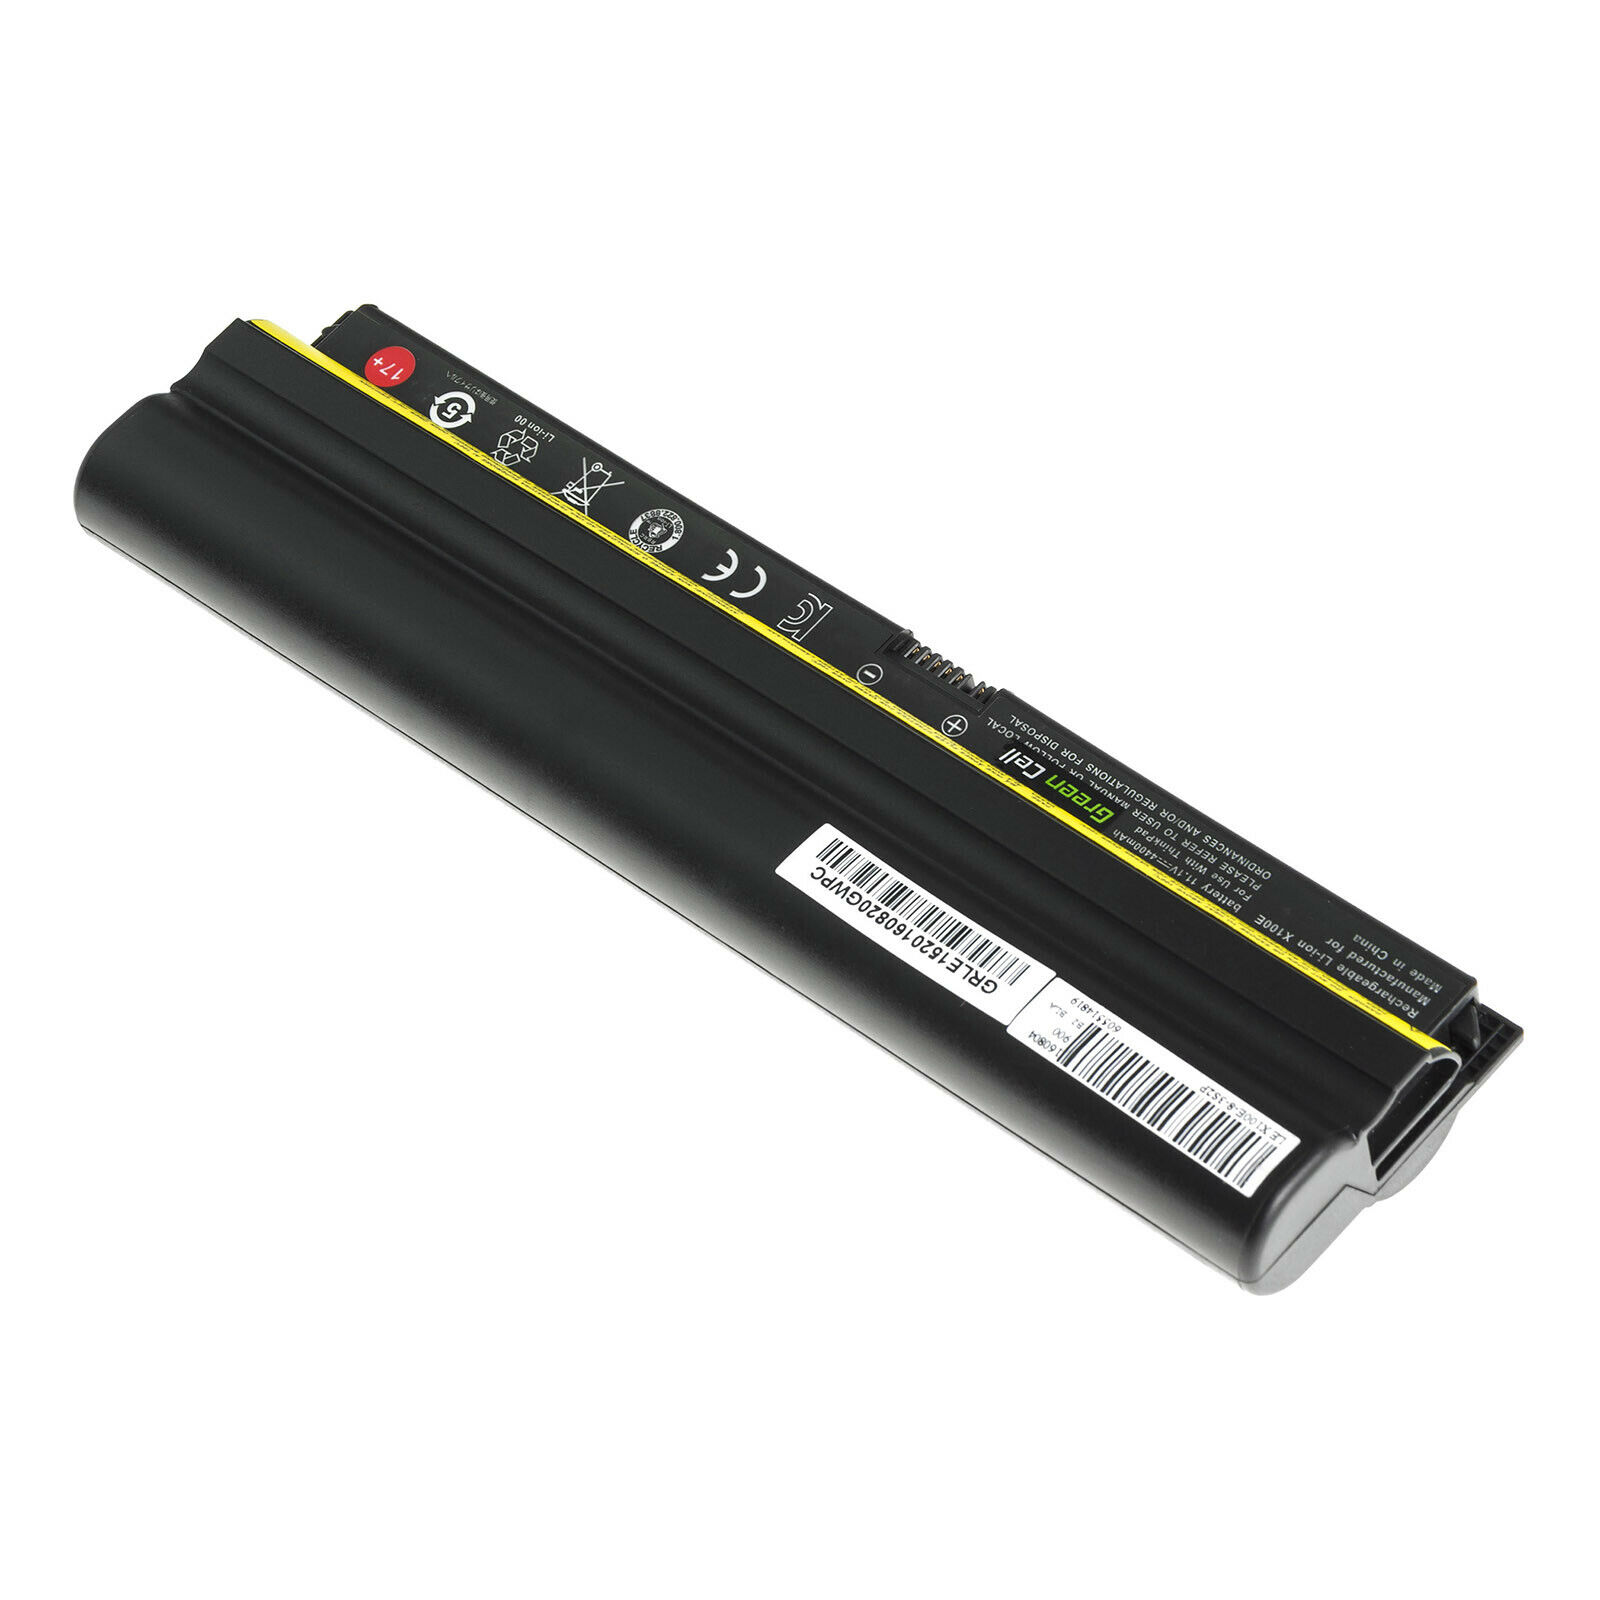 Bateria para Lenovo ThinkPad X100e Edge 11 inch E10 42T4785 42T4787 42T4788